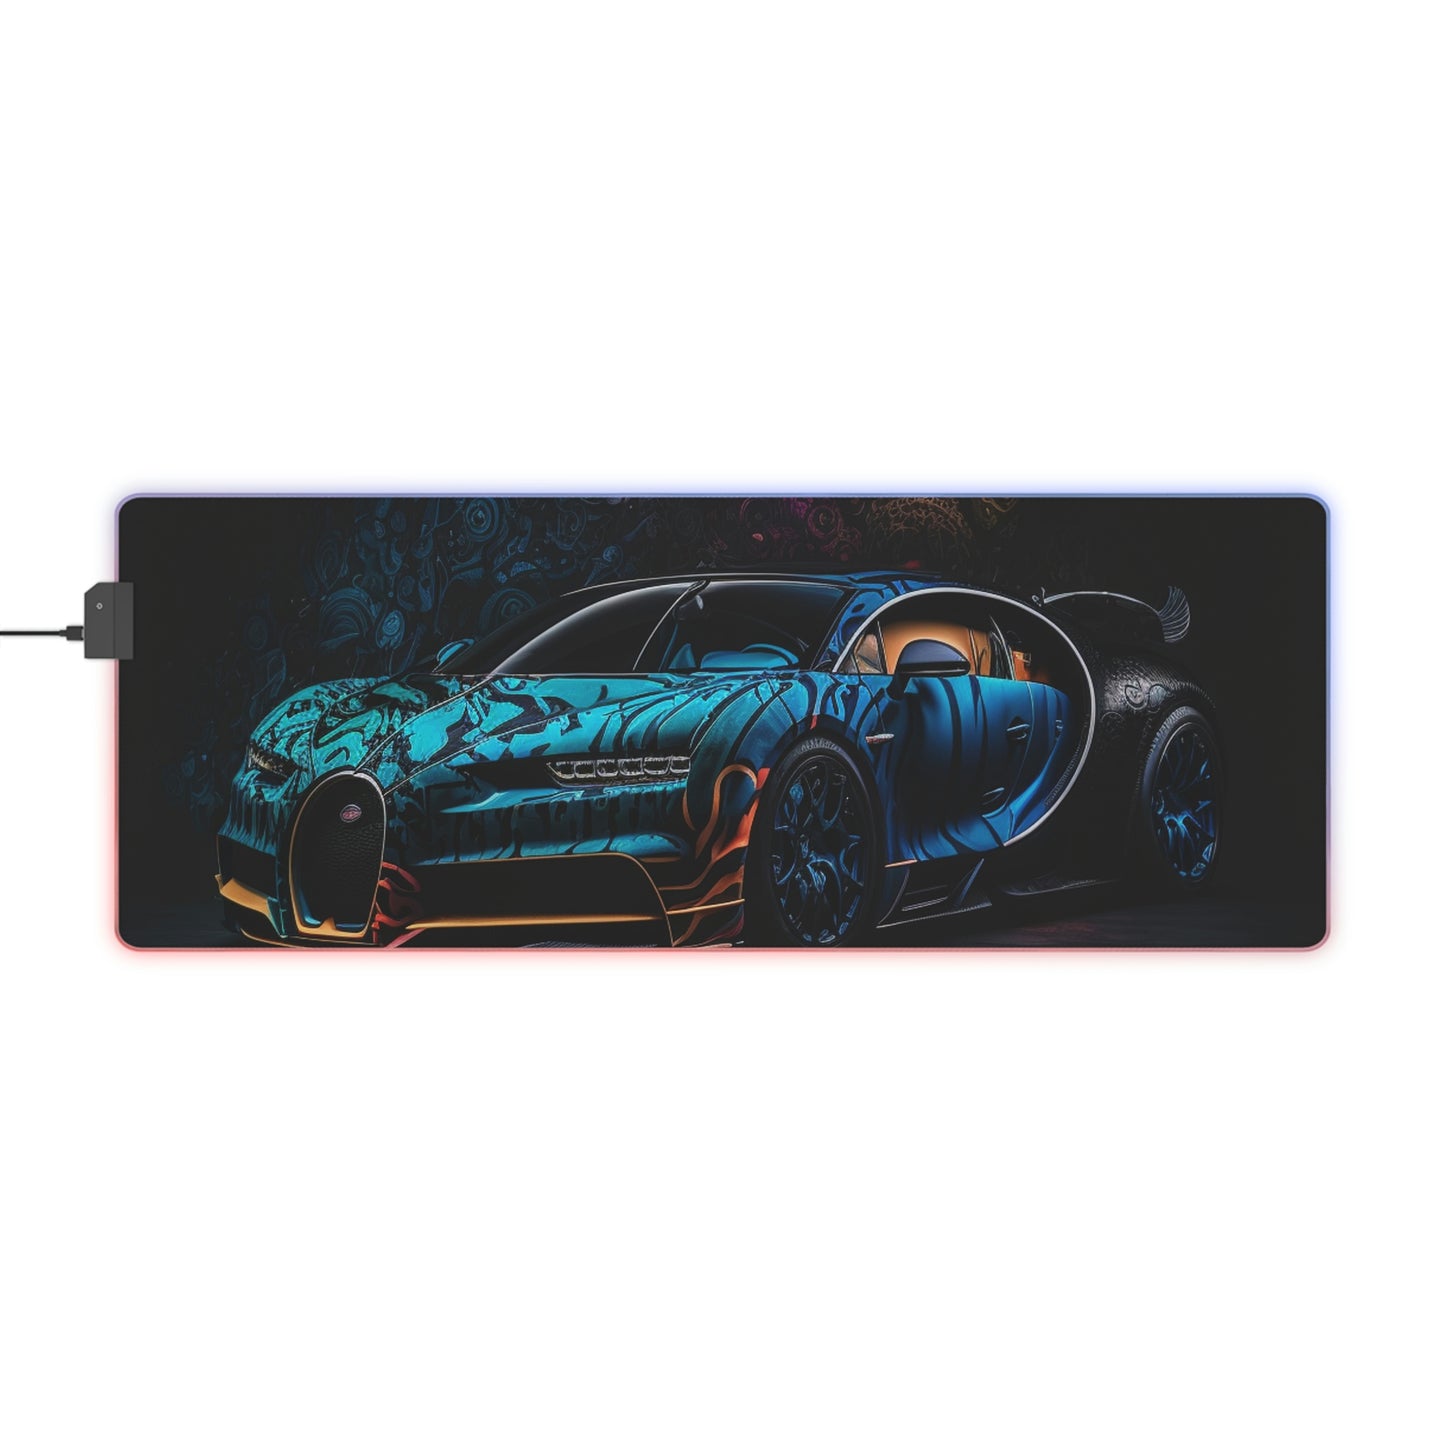 LED Gaming Mouse Pad Bugatti Blue 3